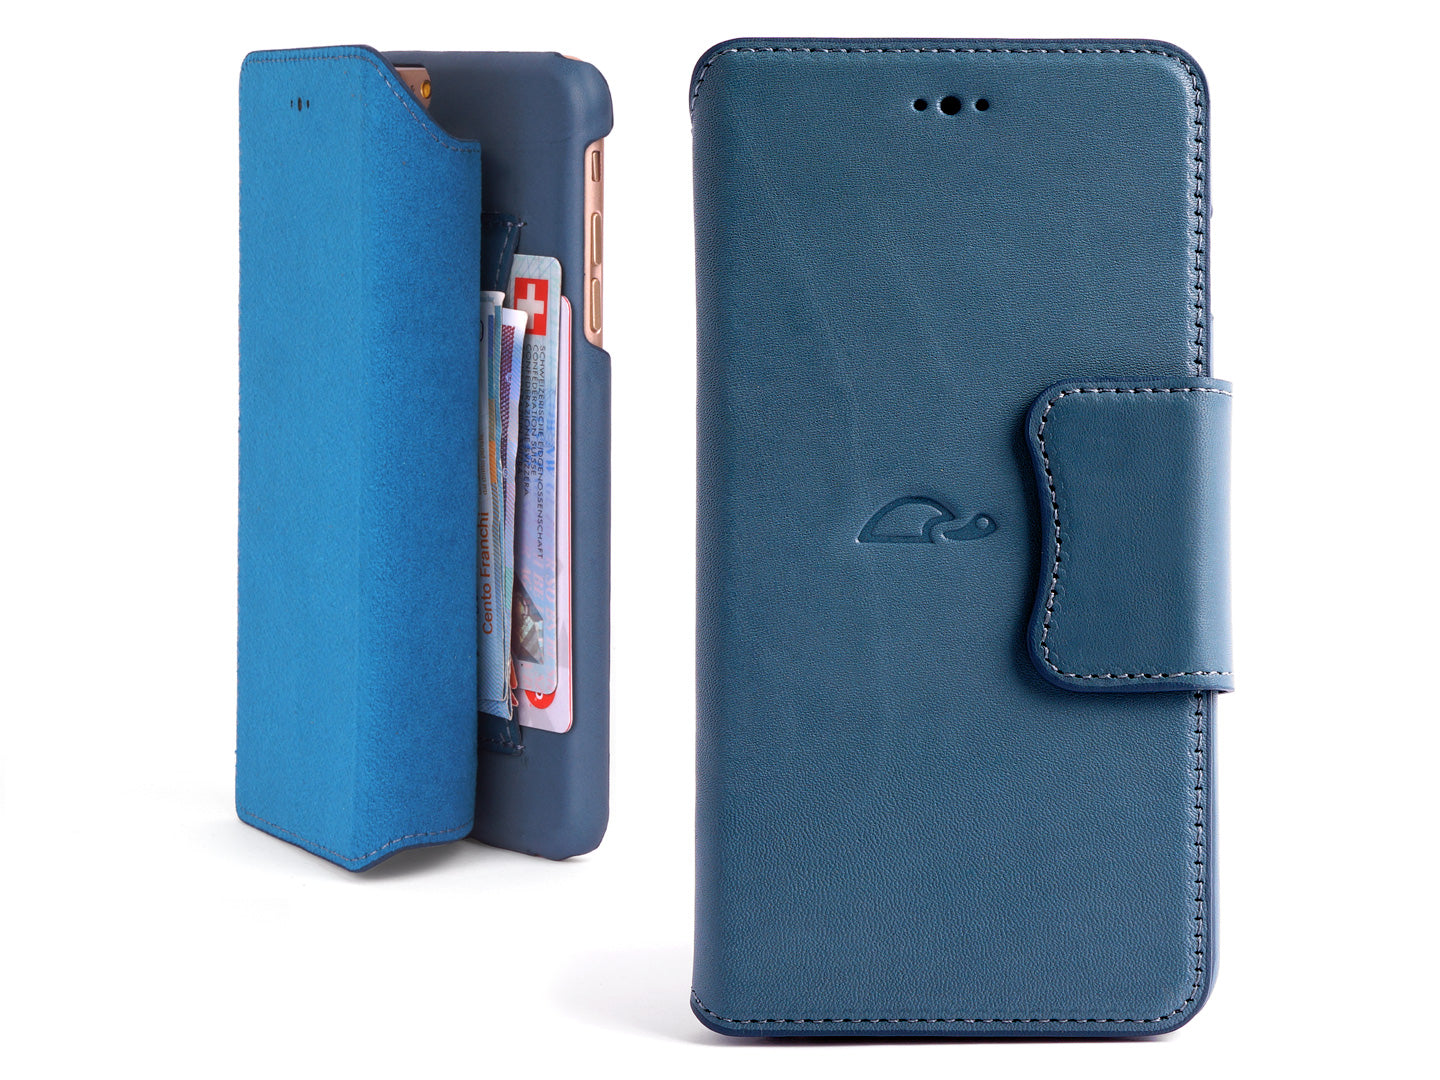 Wallet case iPhone 6 Plus  leather blue - Carapaz